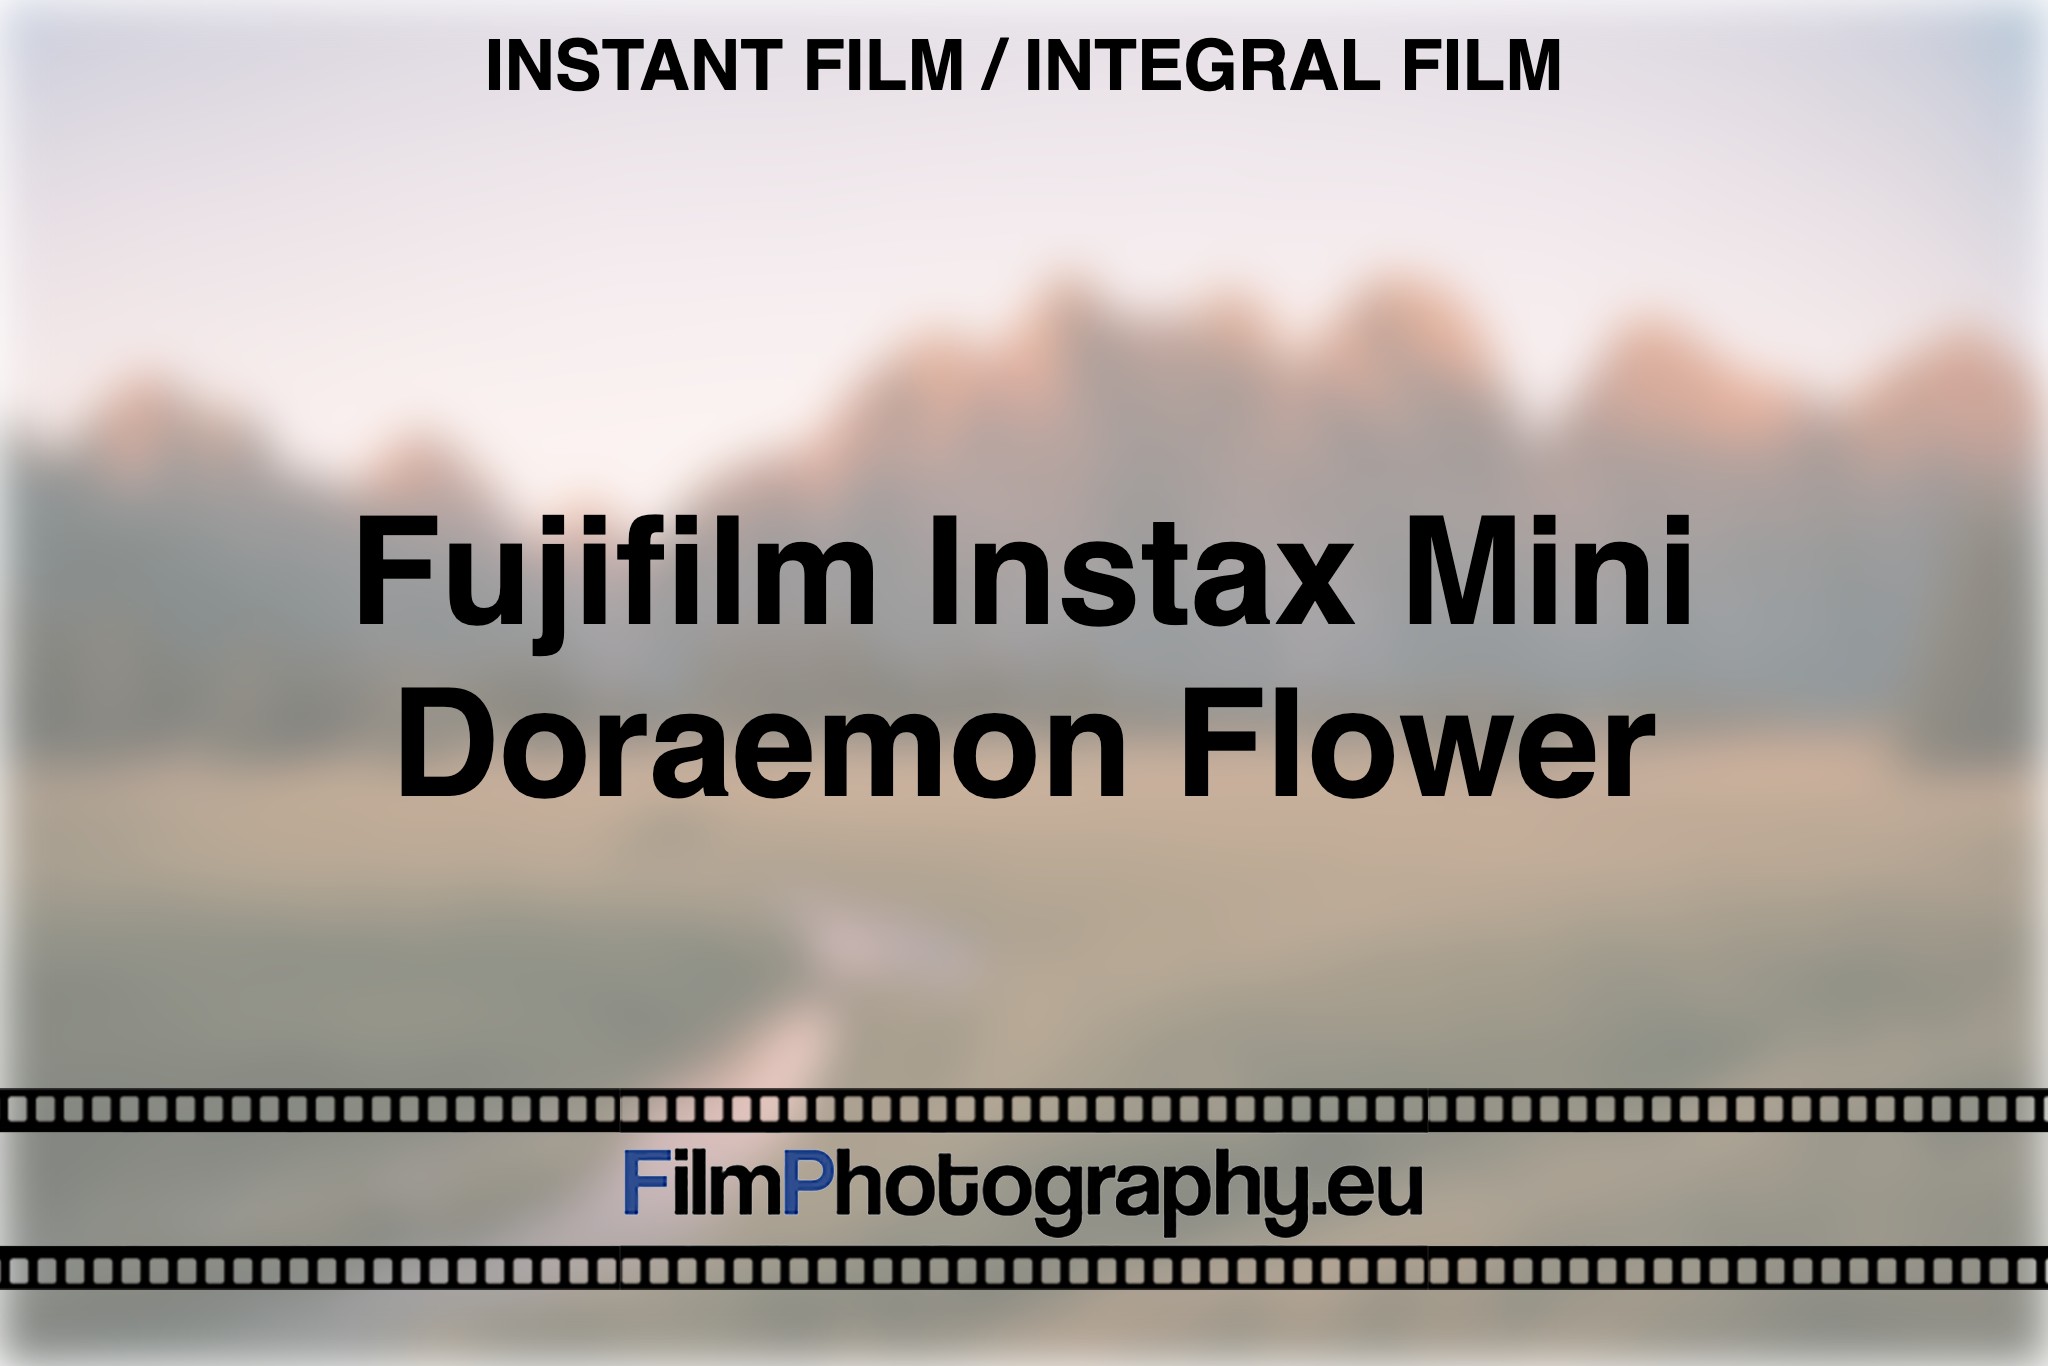 fujifilm-instax-mini-doraemon-flower-instant-film-integral-film-bnv